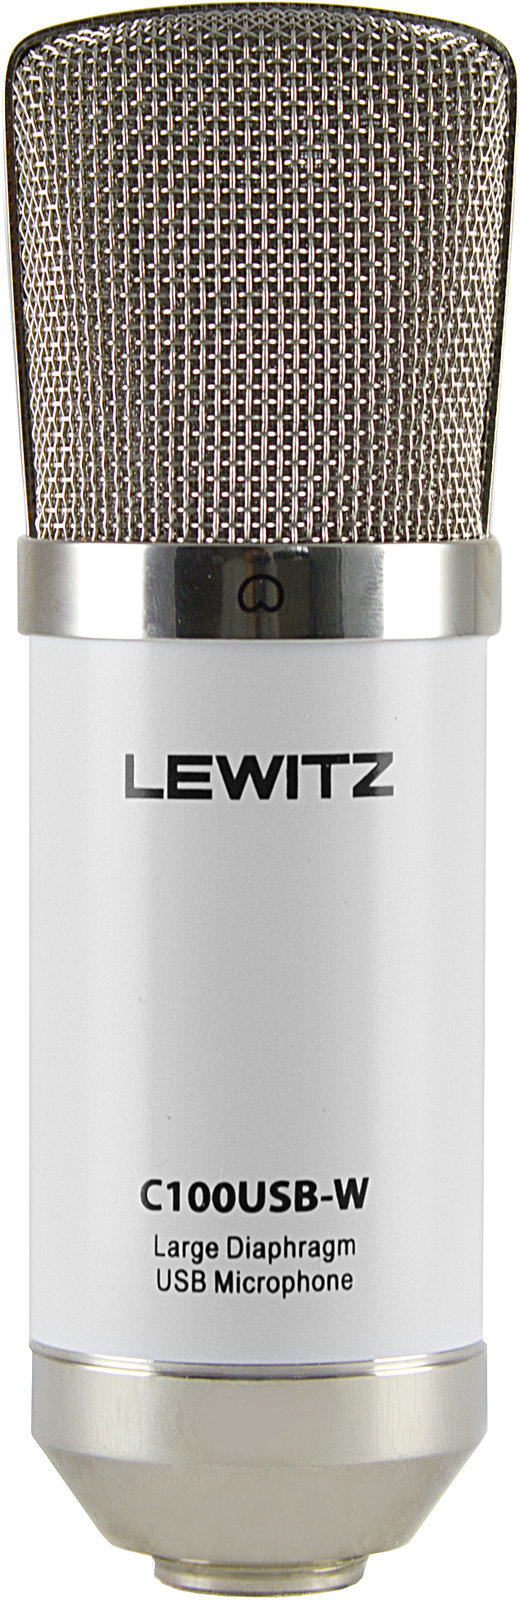 USB Microphone Lewitz C120USB